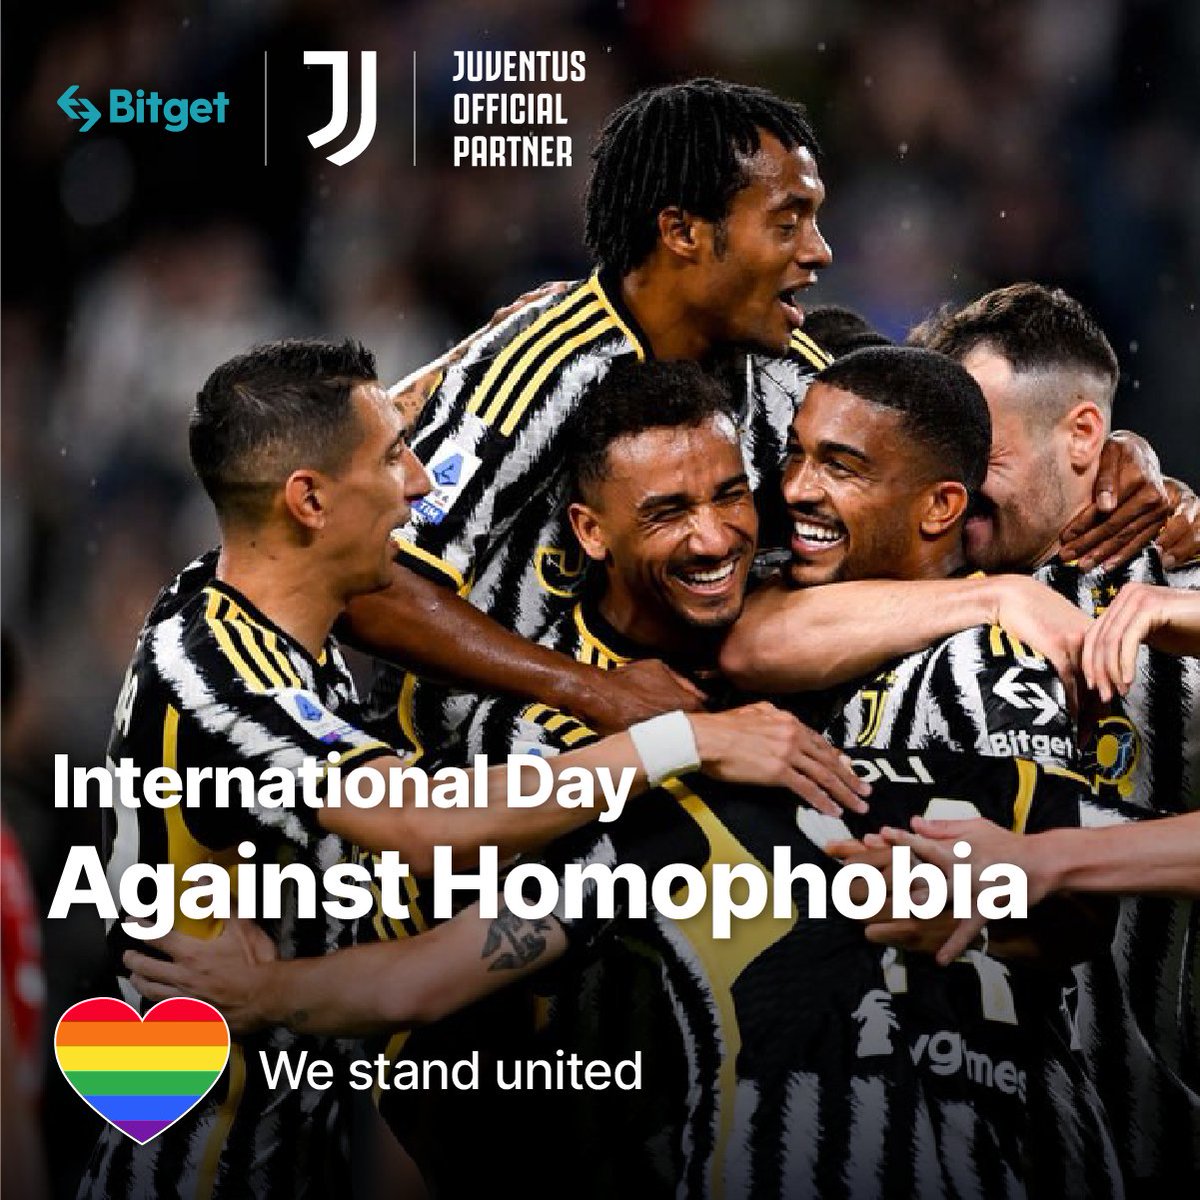 🏳️‍🌈 Oggi, uniti contro l'omofobia con @Bitgetglobal. 

#TakeYourShot